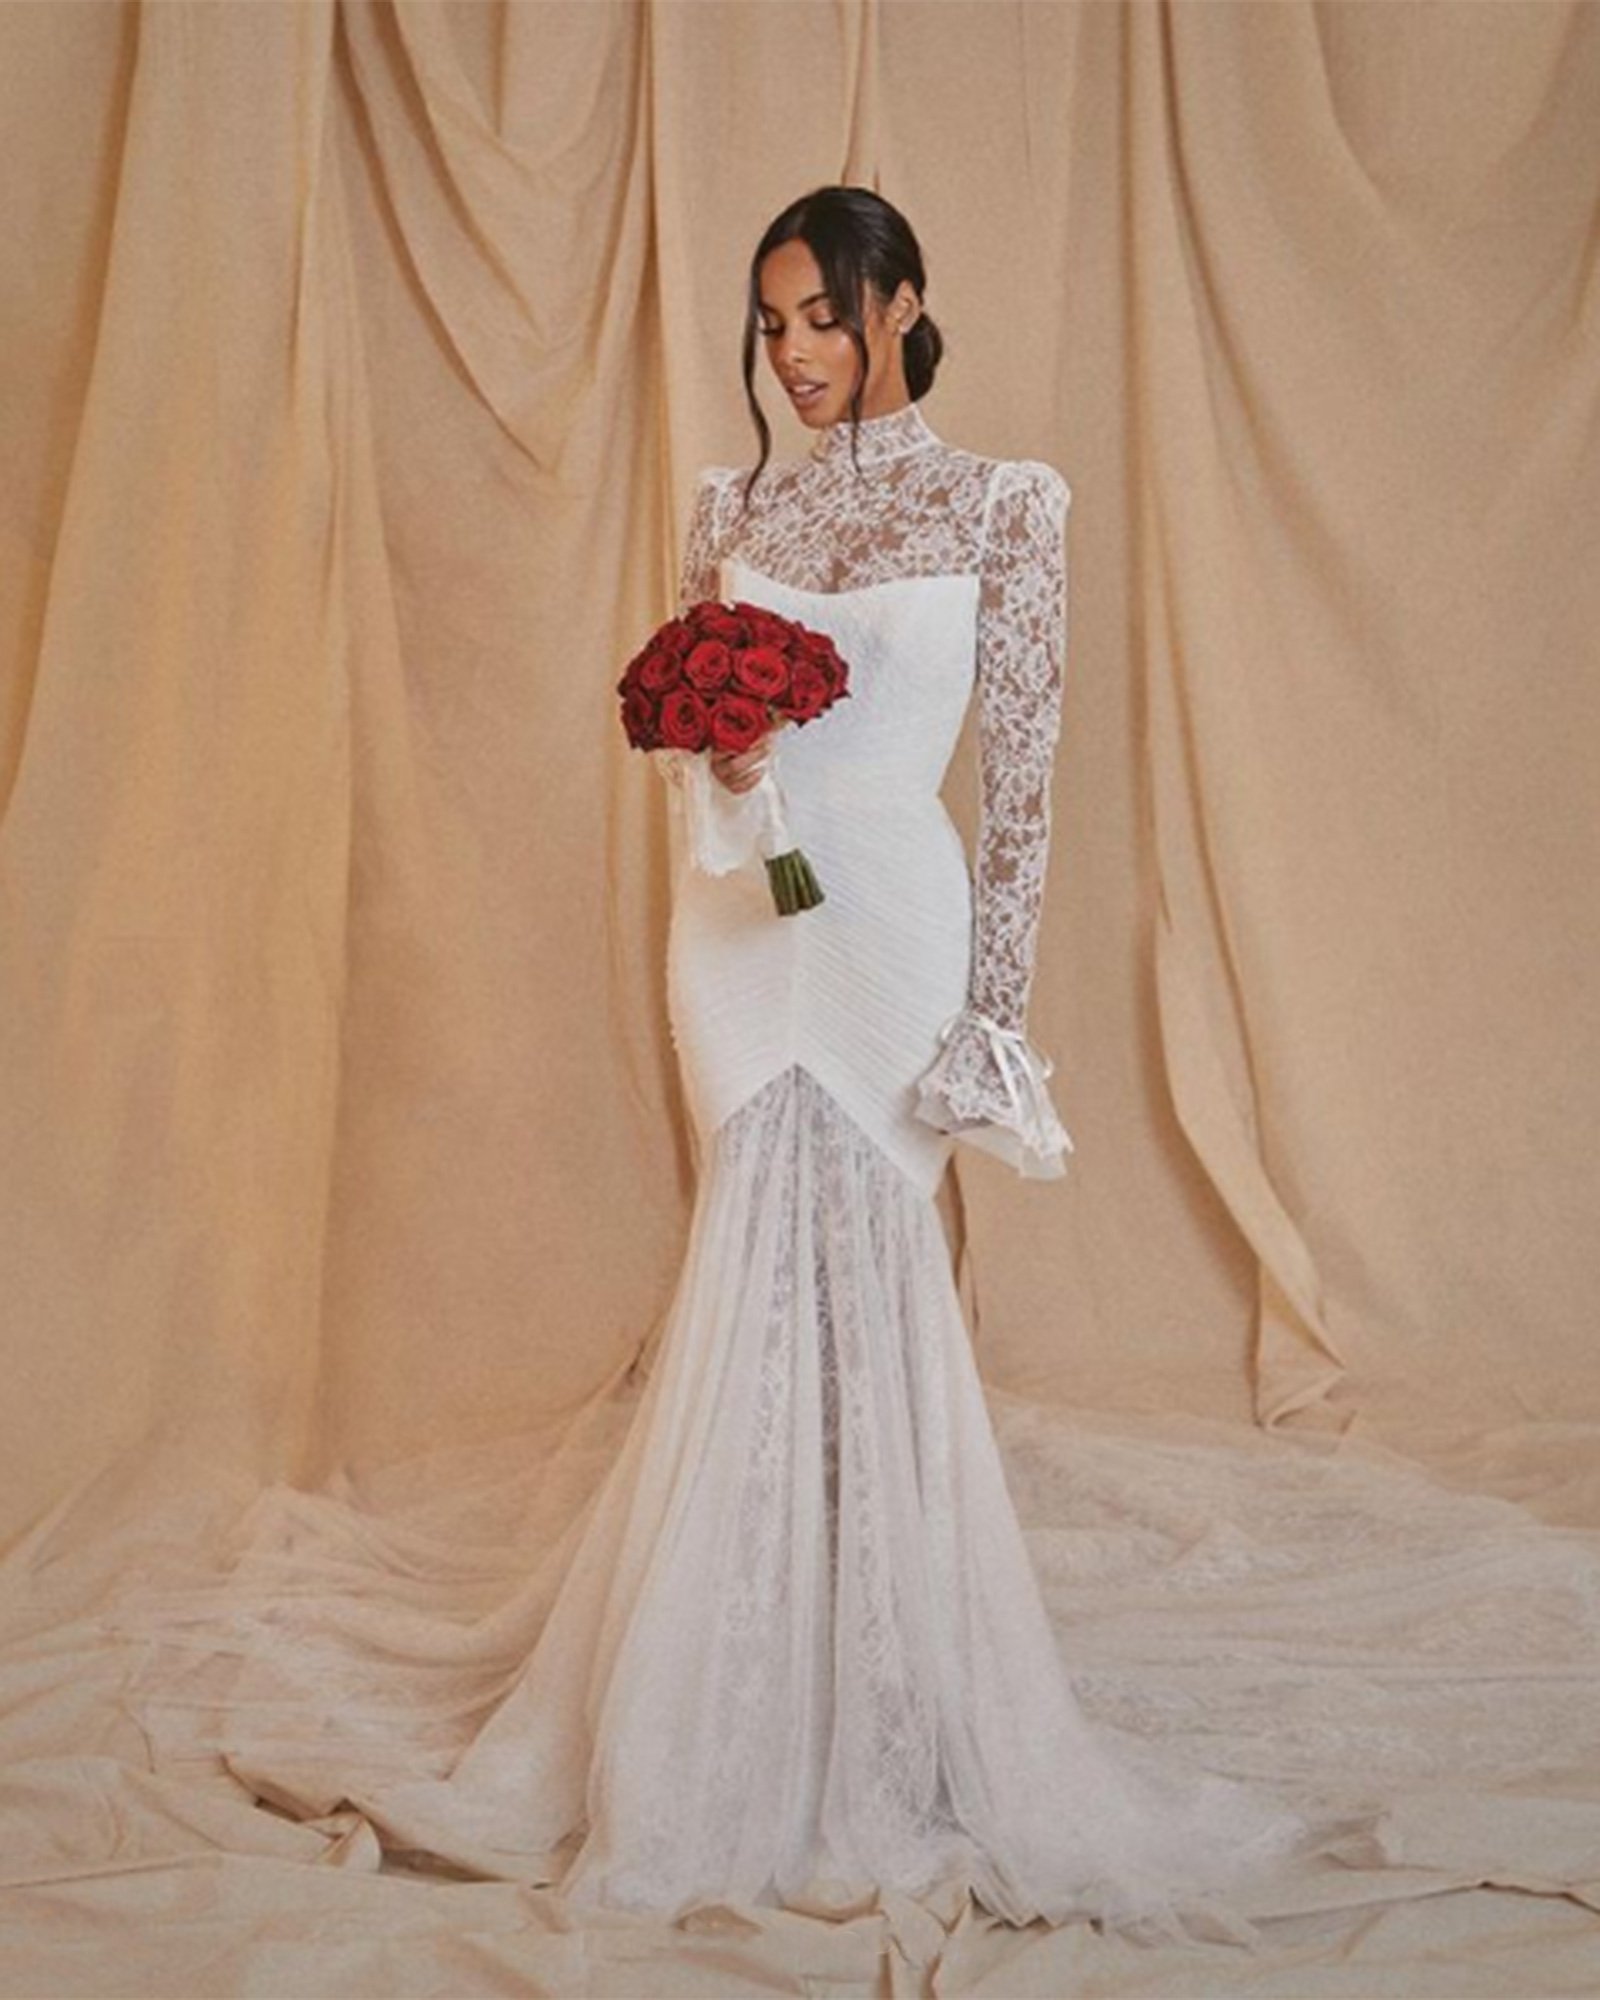 Mingli Tengda Boat Neck Wedding Dress Plus Size 2018 Elegant Princess Dream  Bridal Dress Off The Shoulder Lace Ball Gown Wedding Dress From Xuanyu112,  $236.46 | DHgate.Com